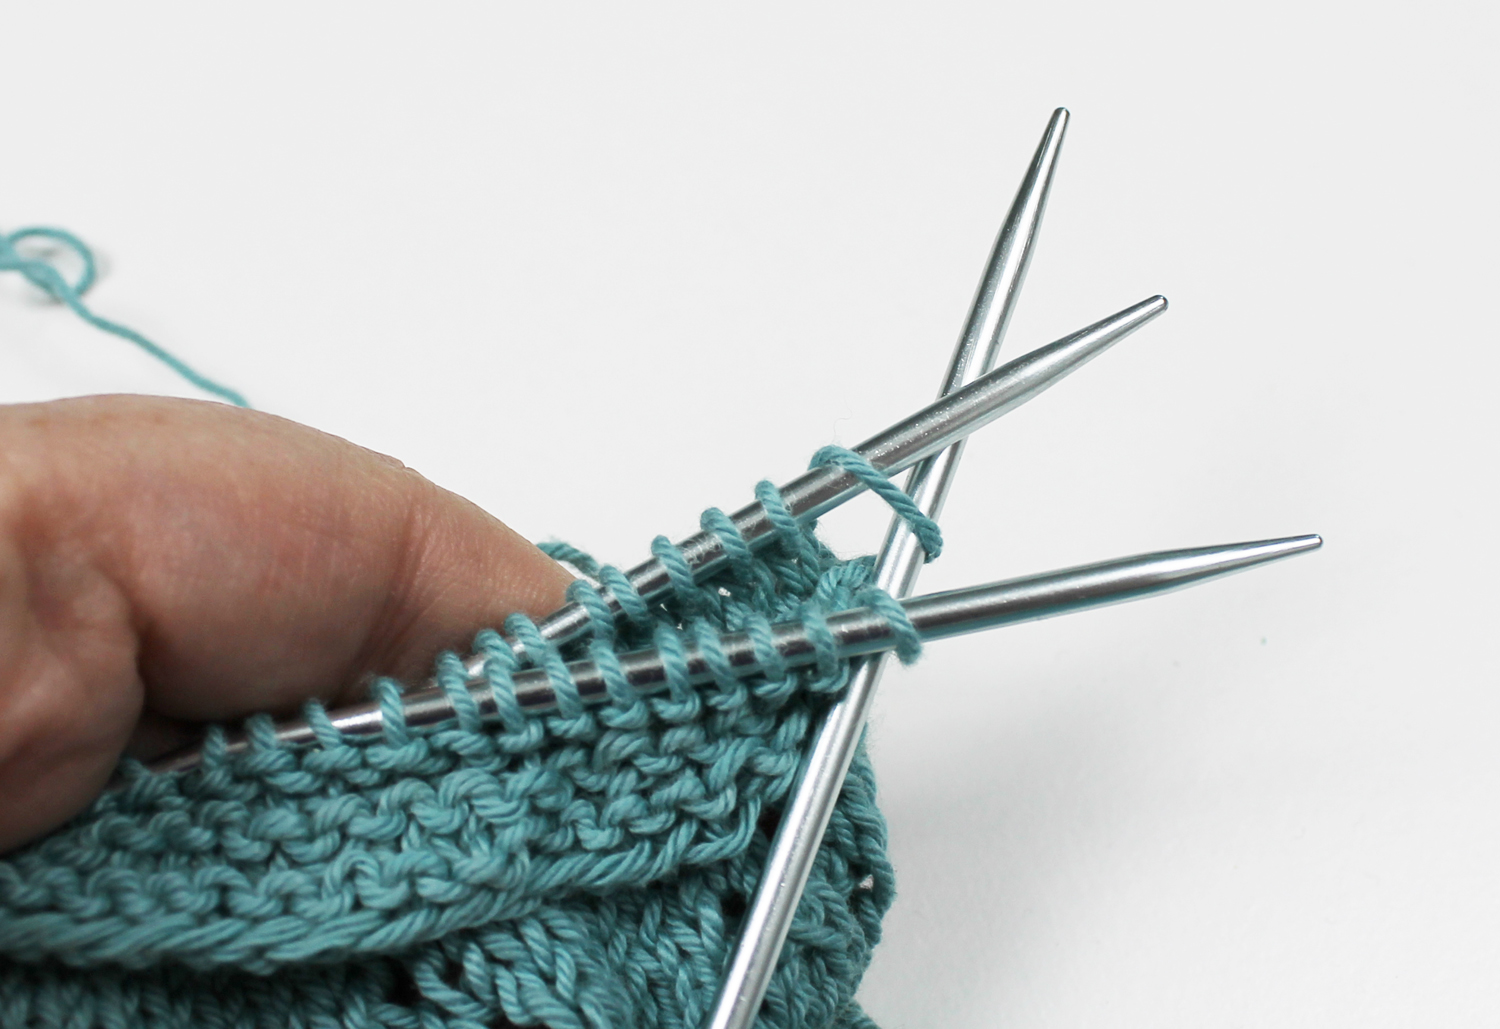 Knitting the three-needle join